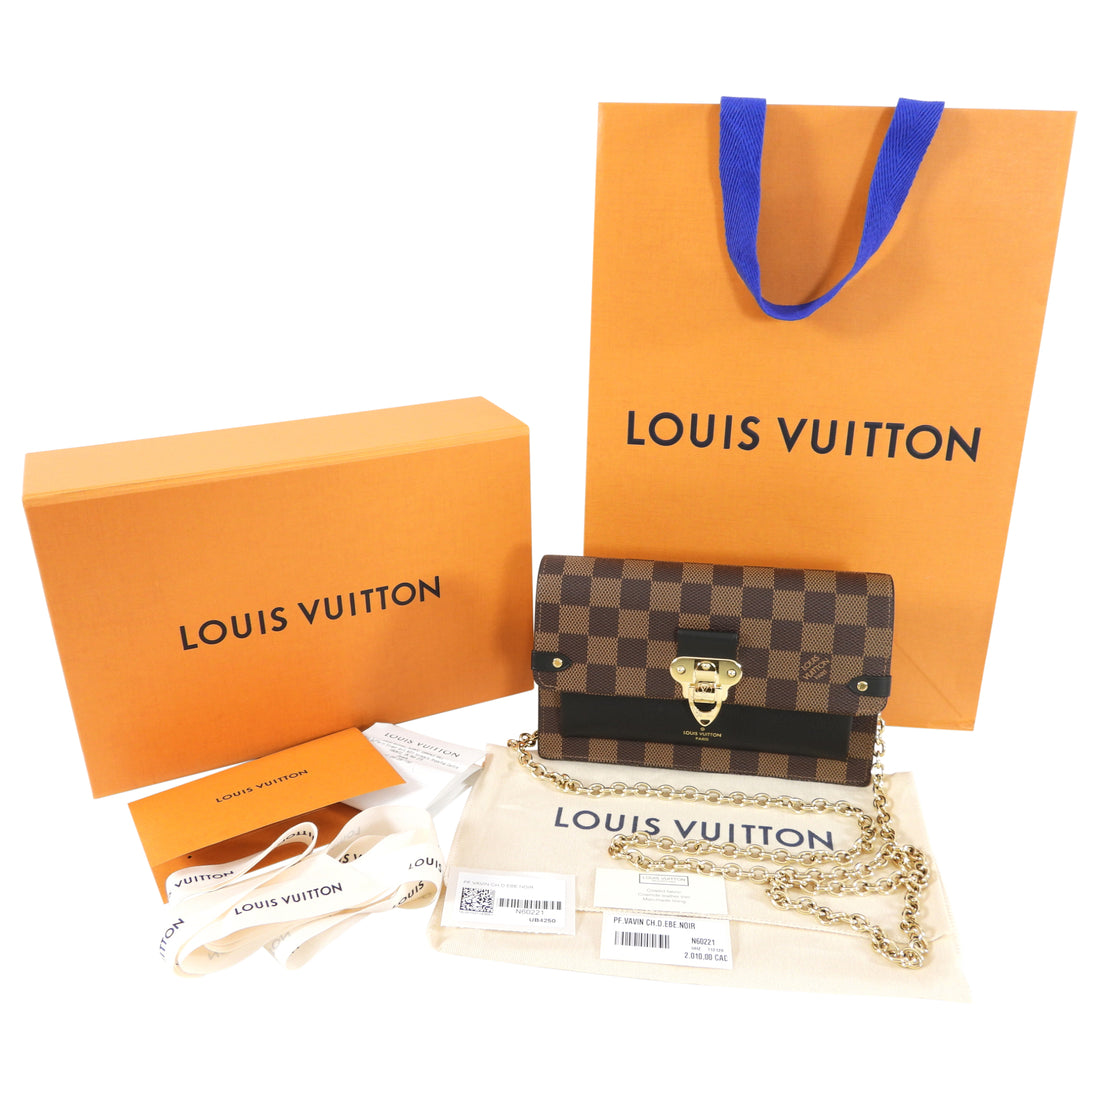 Vavin Chain Wallet Damier Ebene in Marron - Small Leather Goods N60237, LOUIS  VUITTON ®